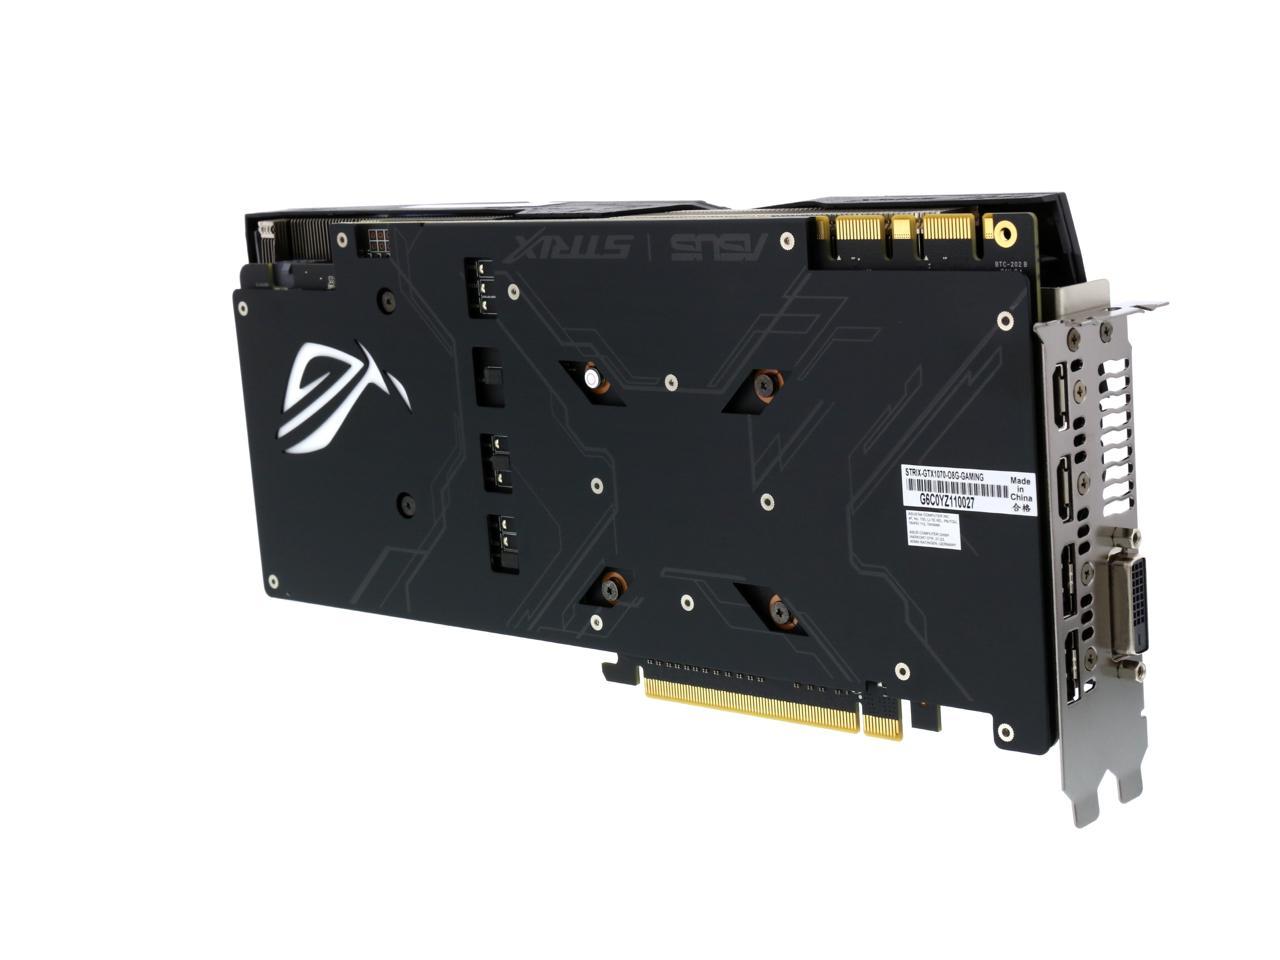 ASUS ROG GeForce GTX 1070 8GB GDDR5 PCI Express 3.0 Video Card with RGB  Lighting STRIX-GTX1070-O8G-GAMING